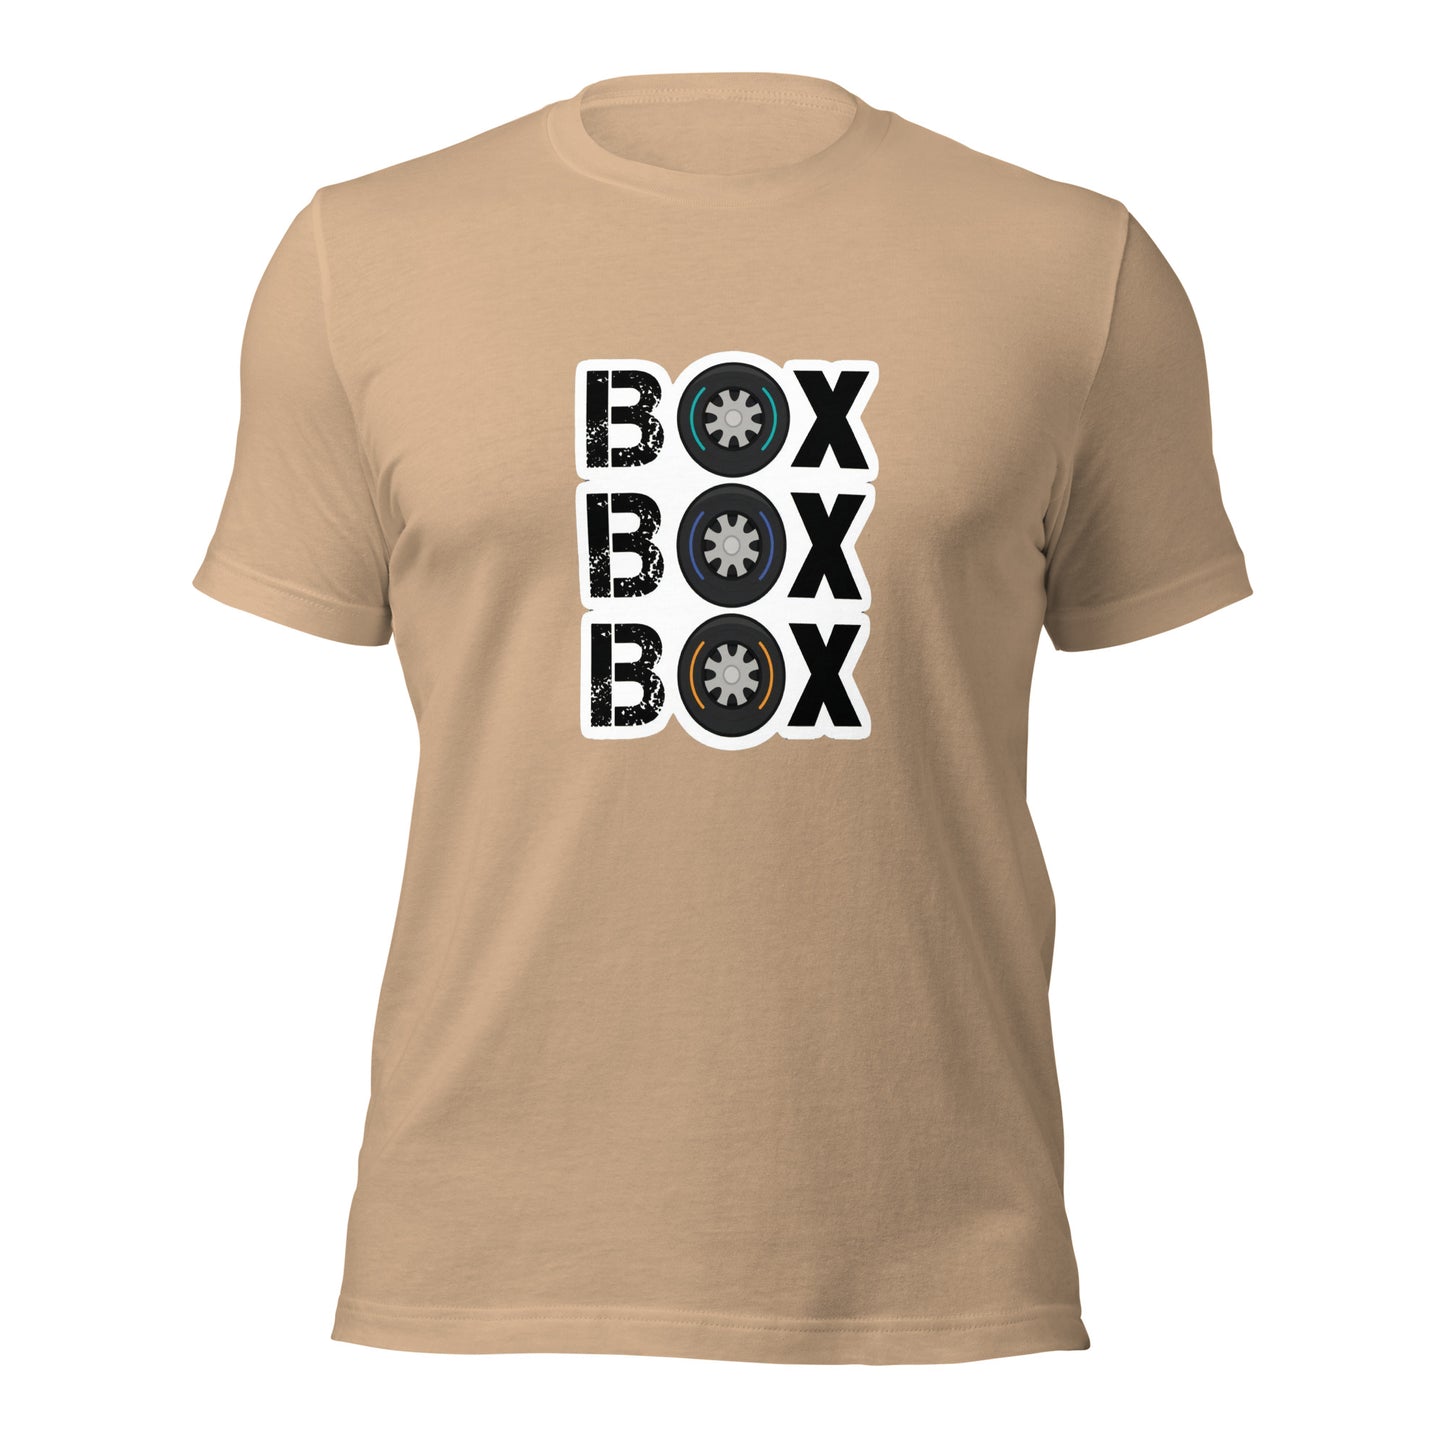 F1 Box Box Box Tee